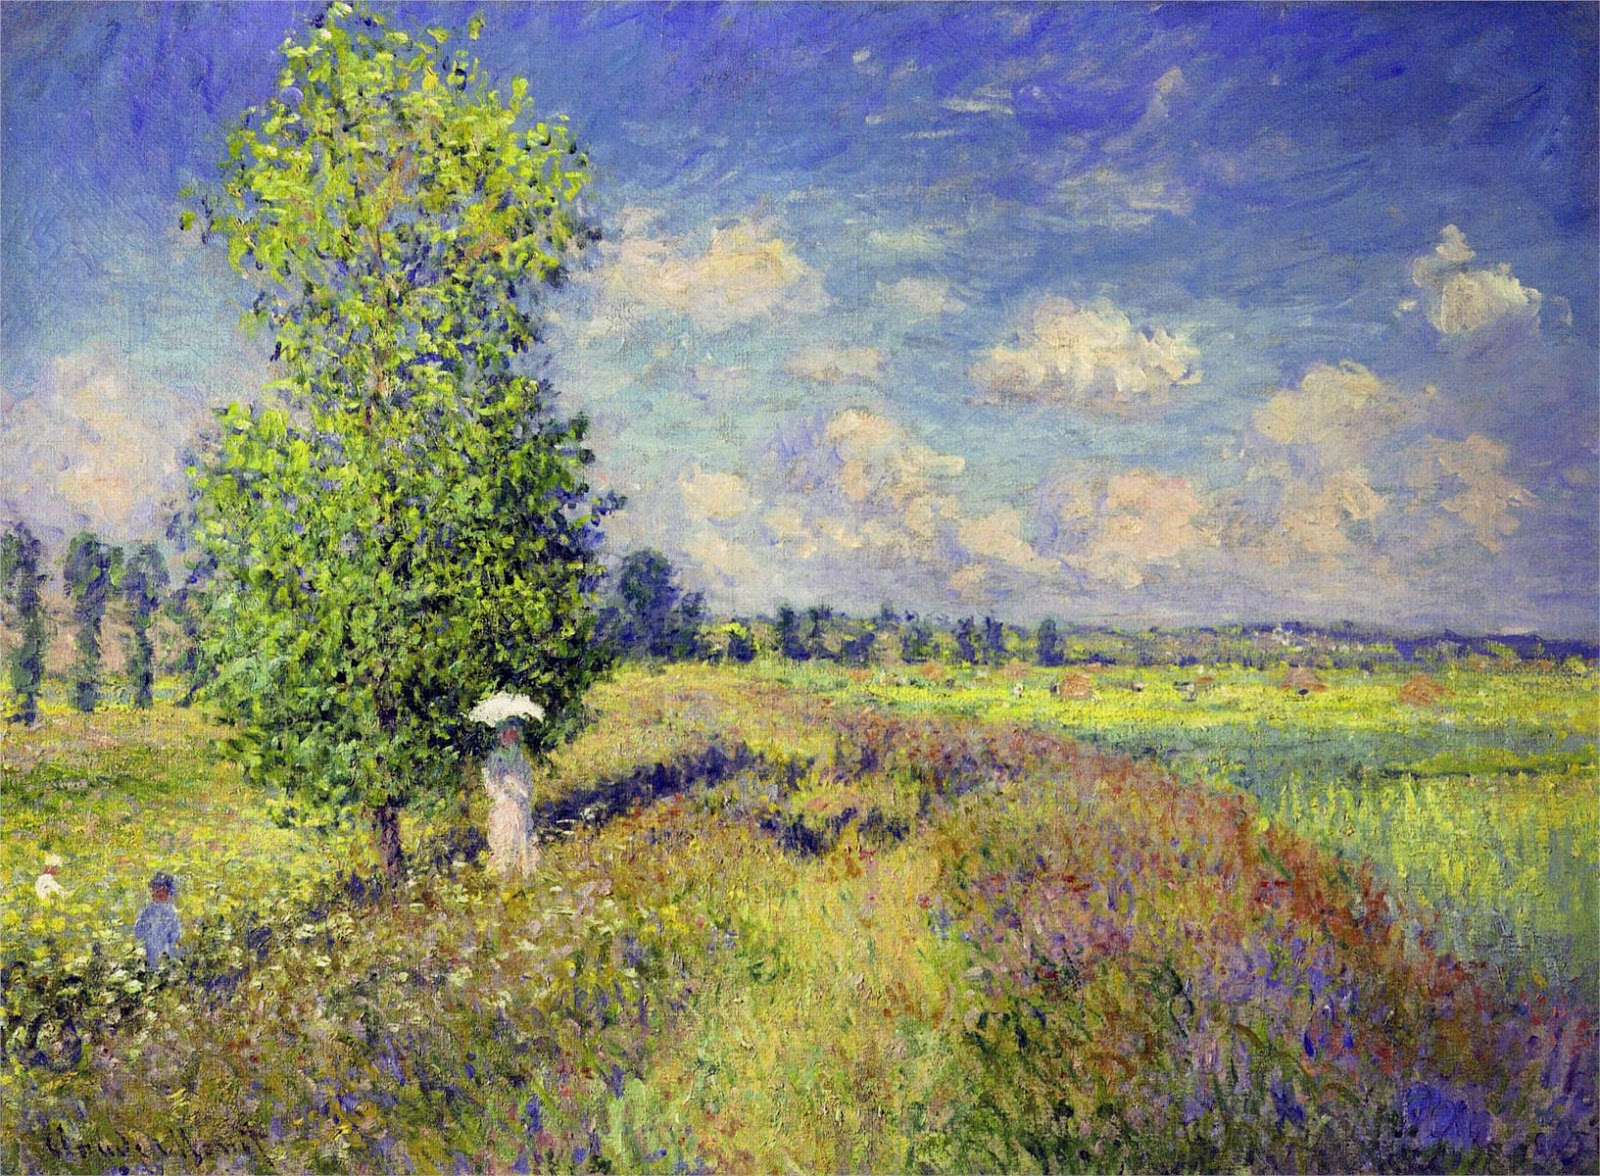 Claude+Monet-1840-1926 (828).jpg